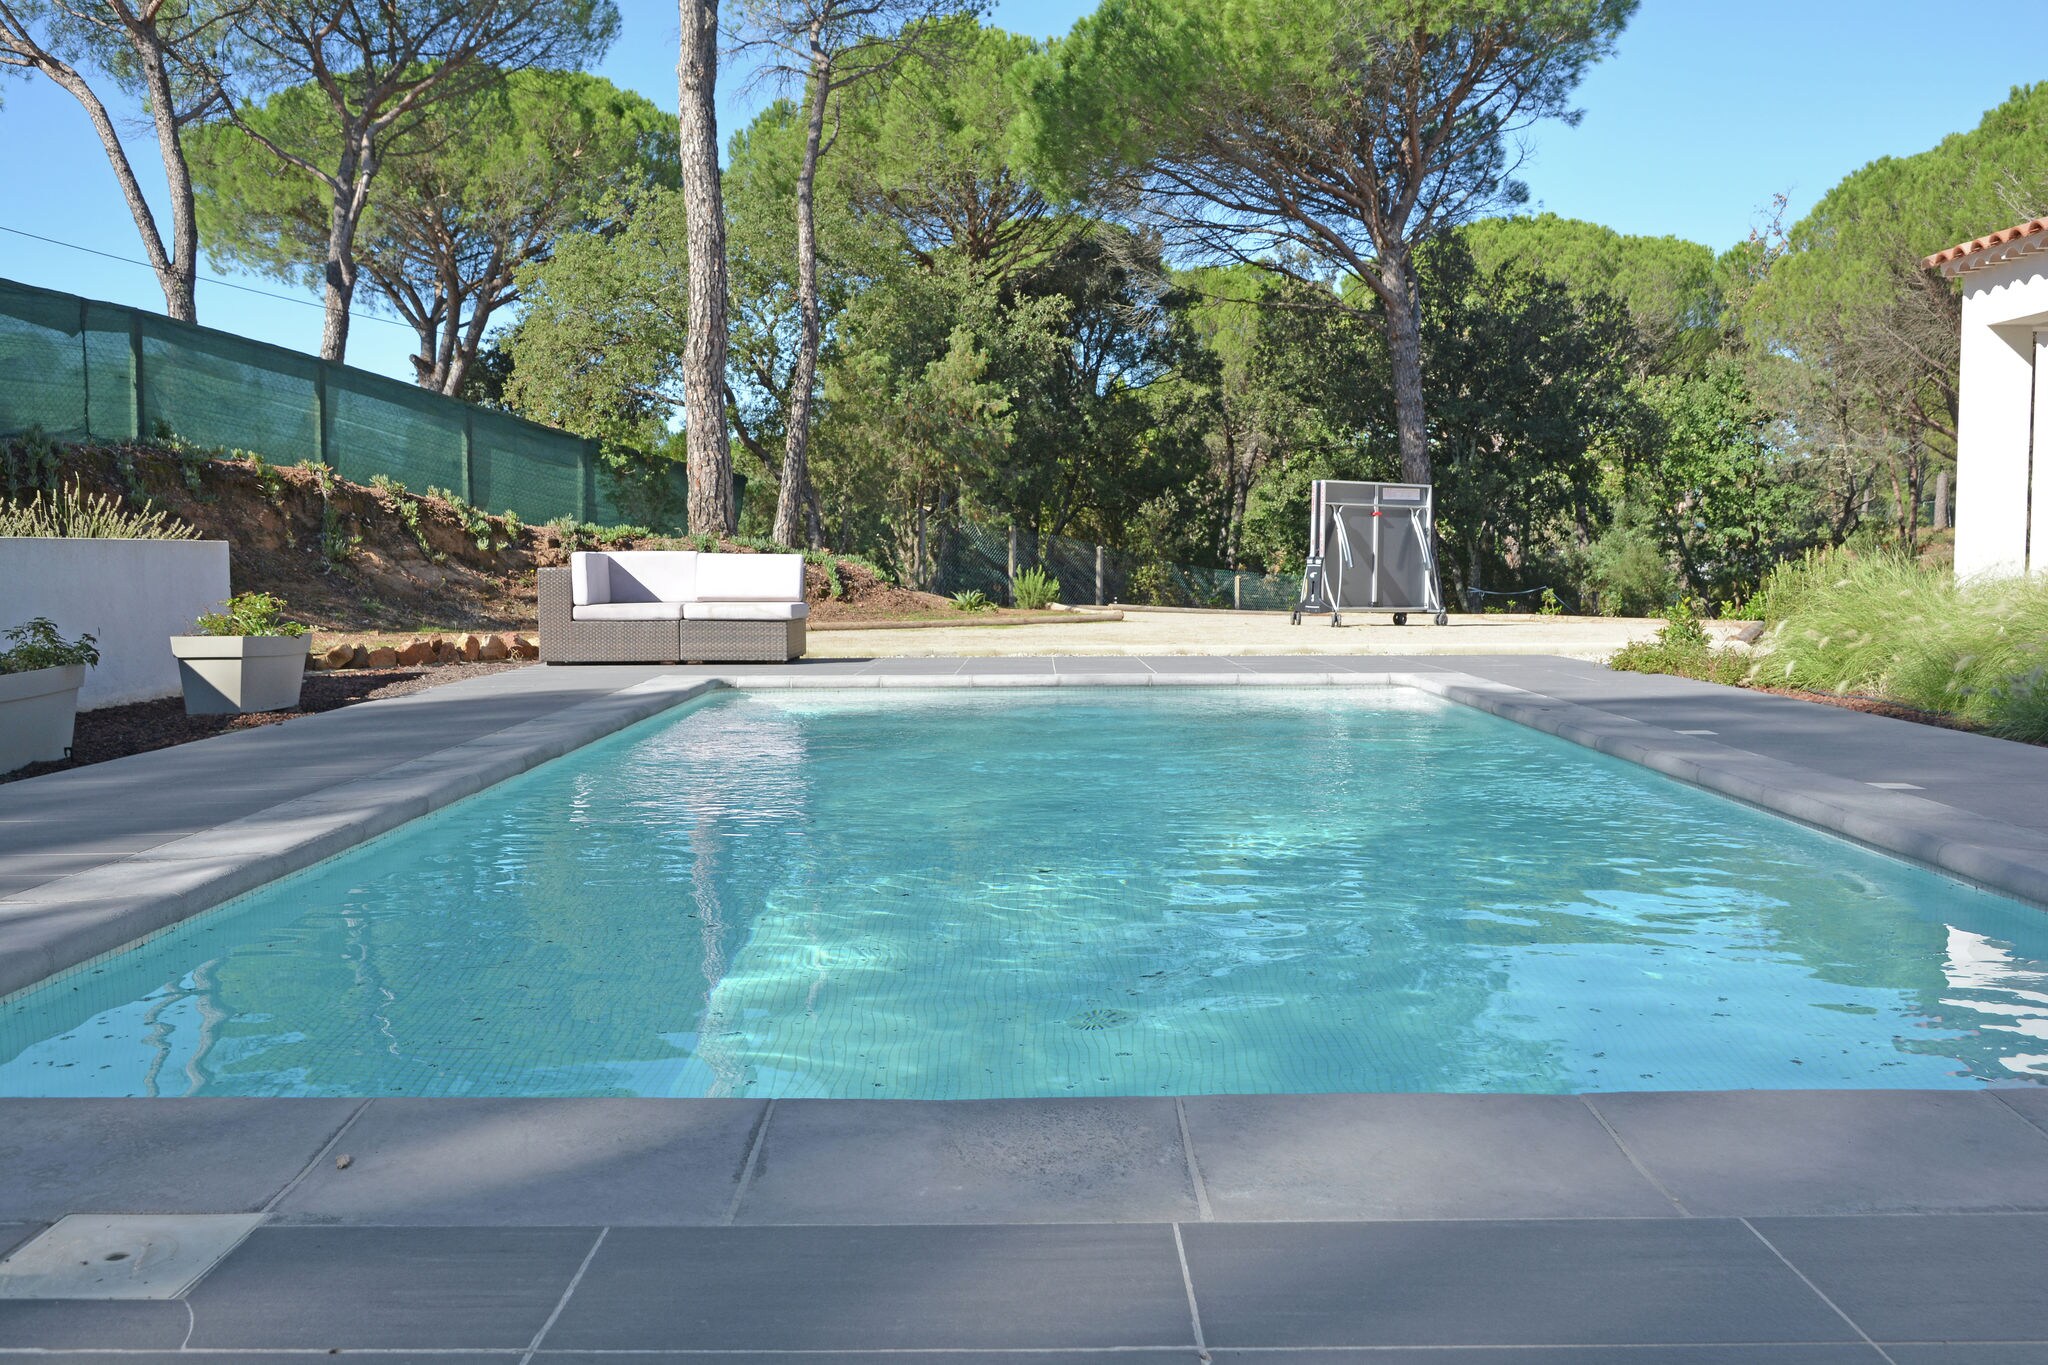 Villa moderne en Provence avec terrasse couverte